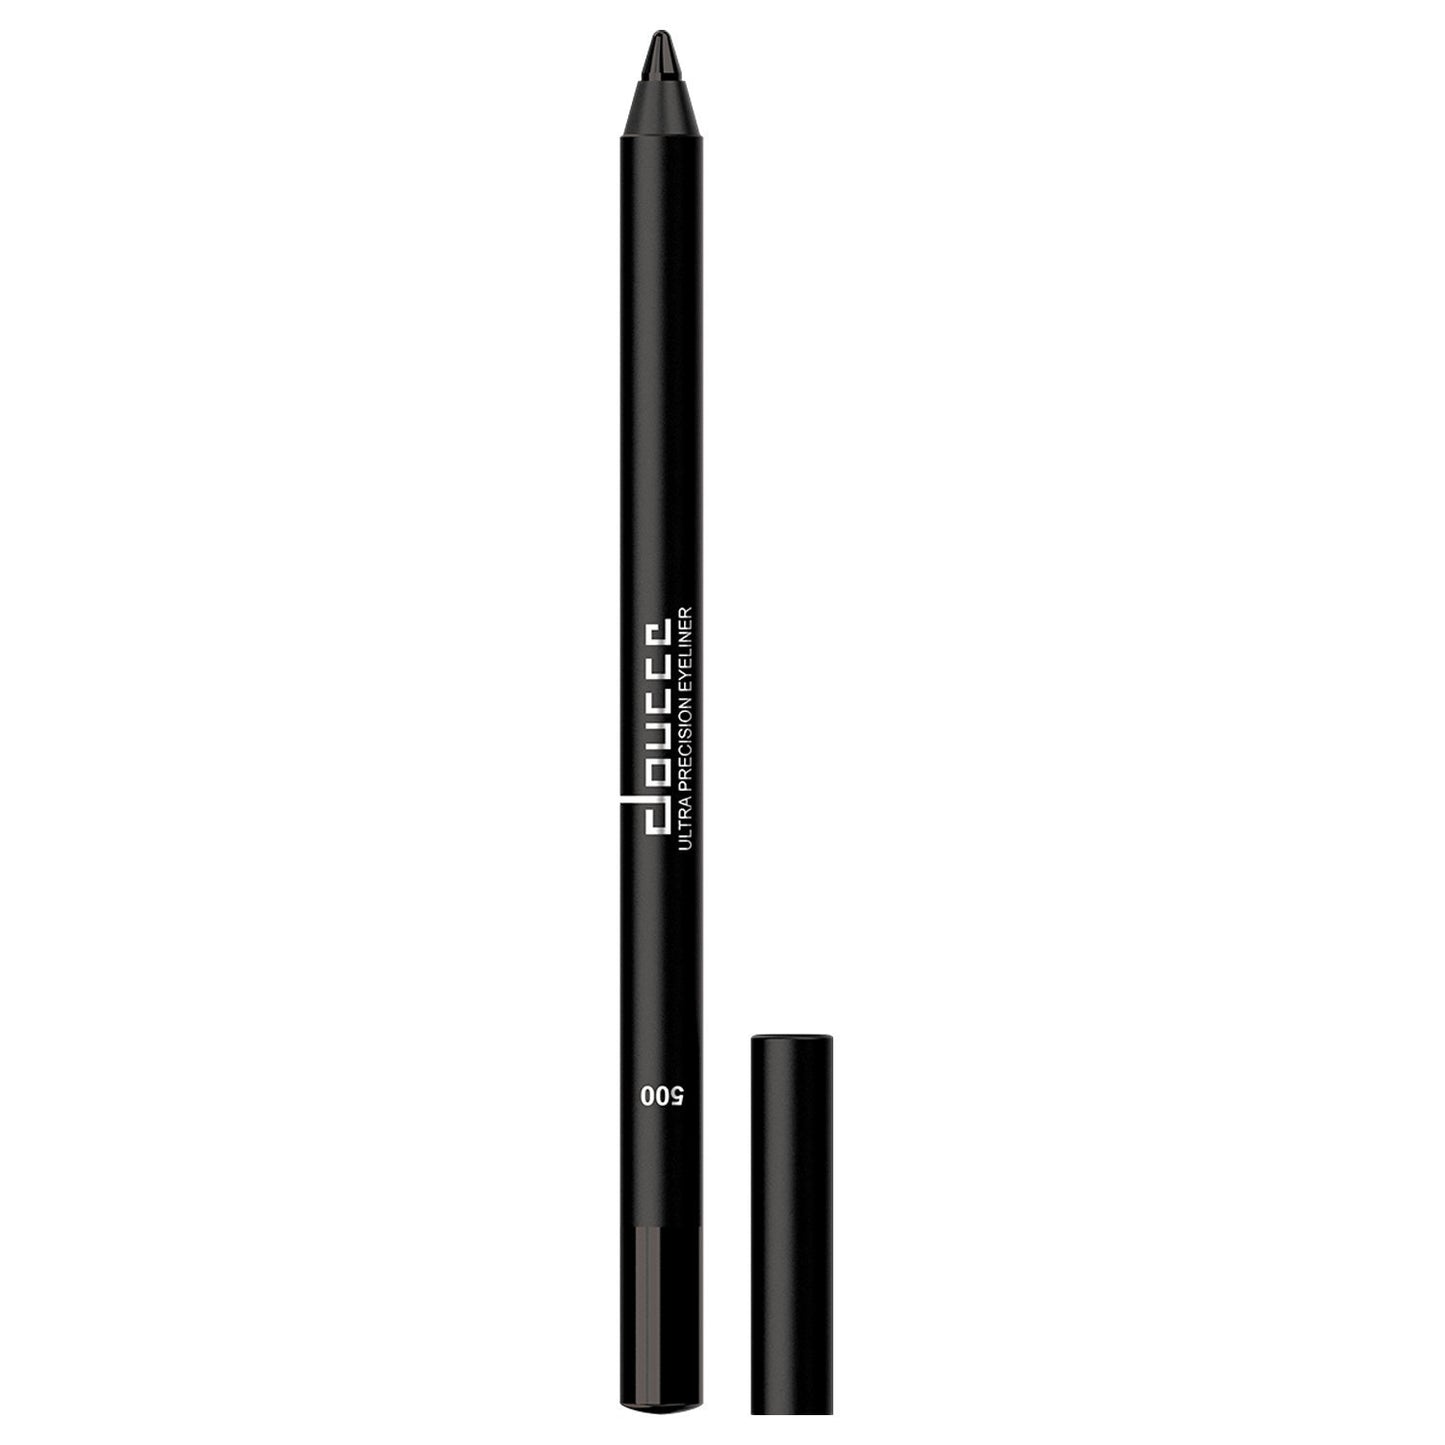 Doucce Ultra Precision Eyeliner | Black #500 | Full size.042oz